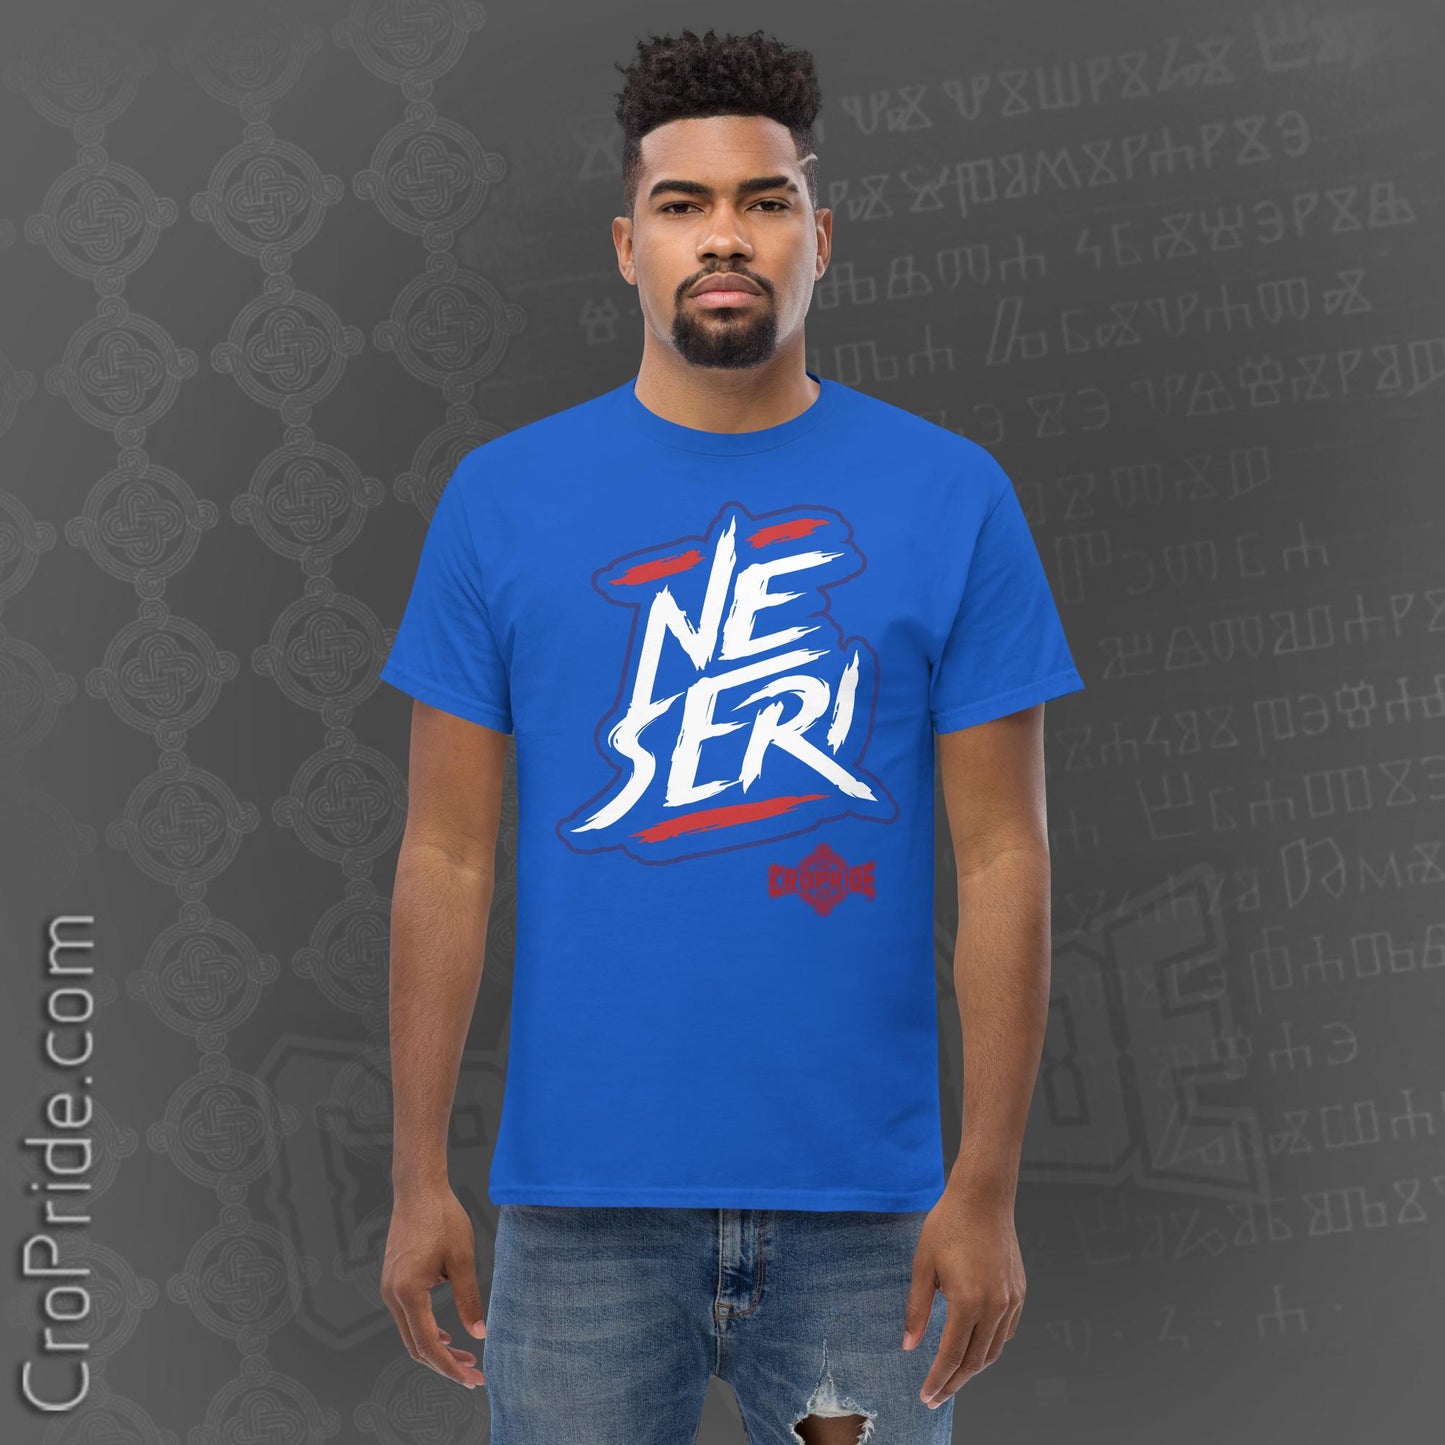 Croatian T-Shirt | "NE SERI" Funny Design | 100% Cotton | Sizes S-3XL